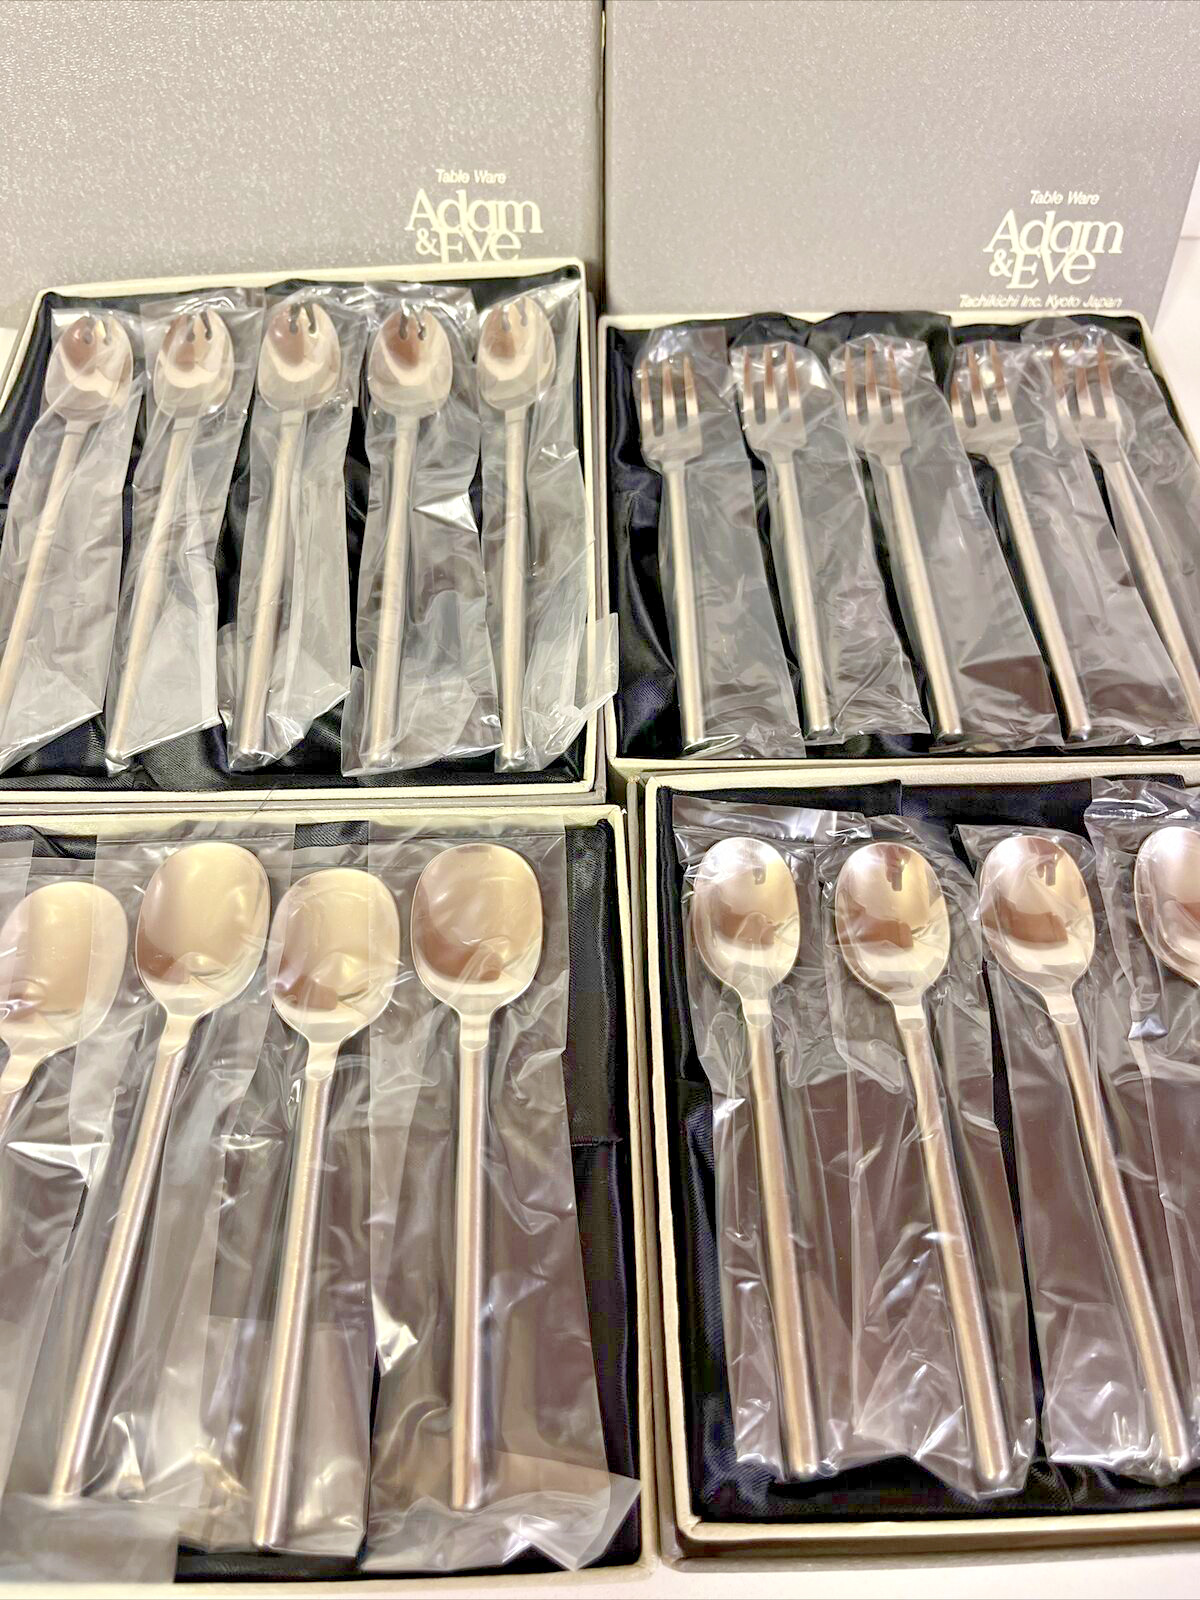 Tachikichi Adam & Eve Cutlery Sleek & Elegant Vintage Kyoto Japan 20 Spoon Forks